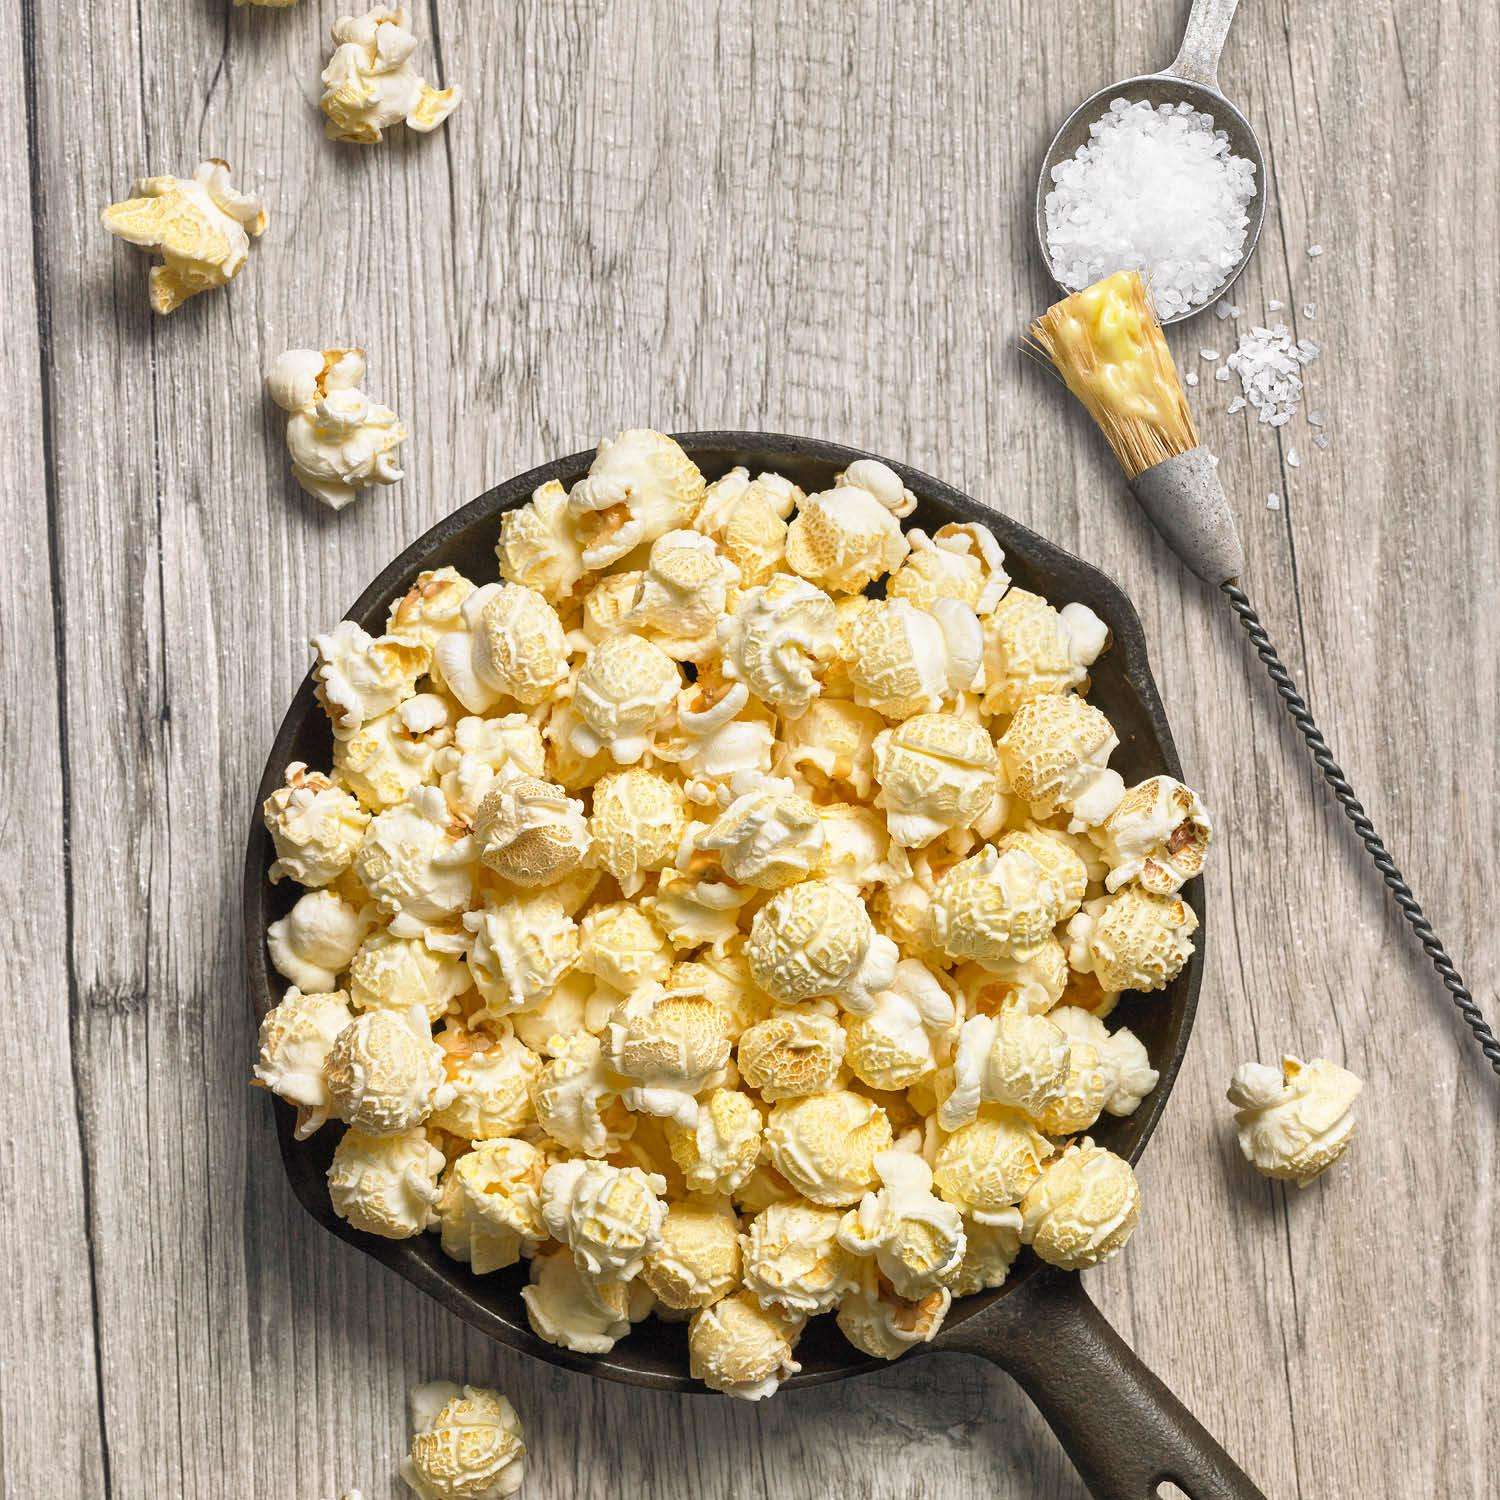 Popcorn Butter Pump Rentals